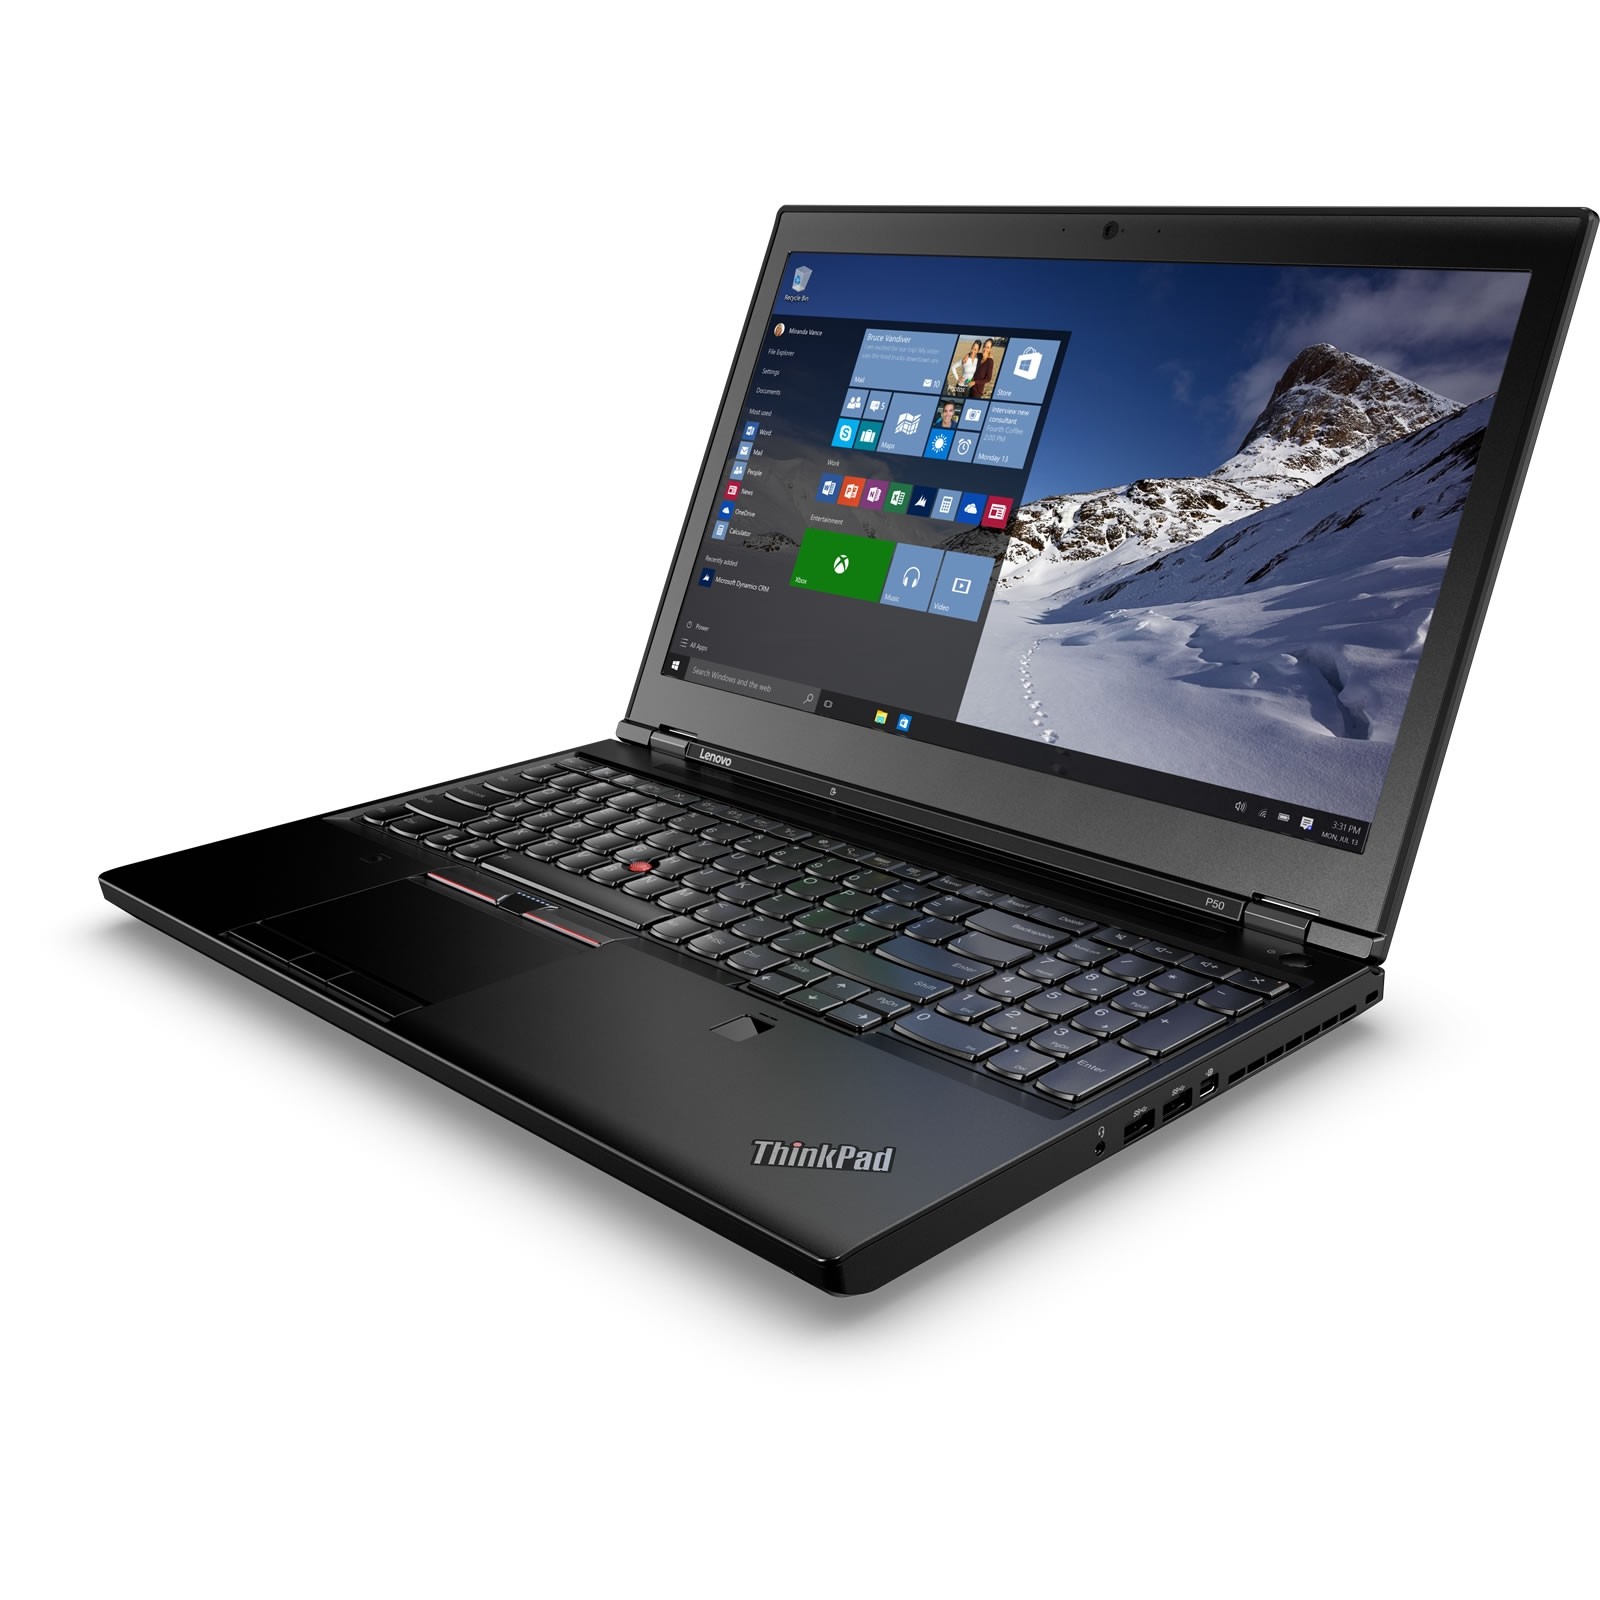 Lenovo ThinkPad P50 15.6" Laptop